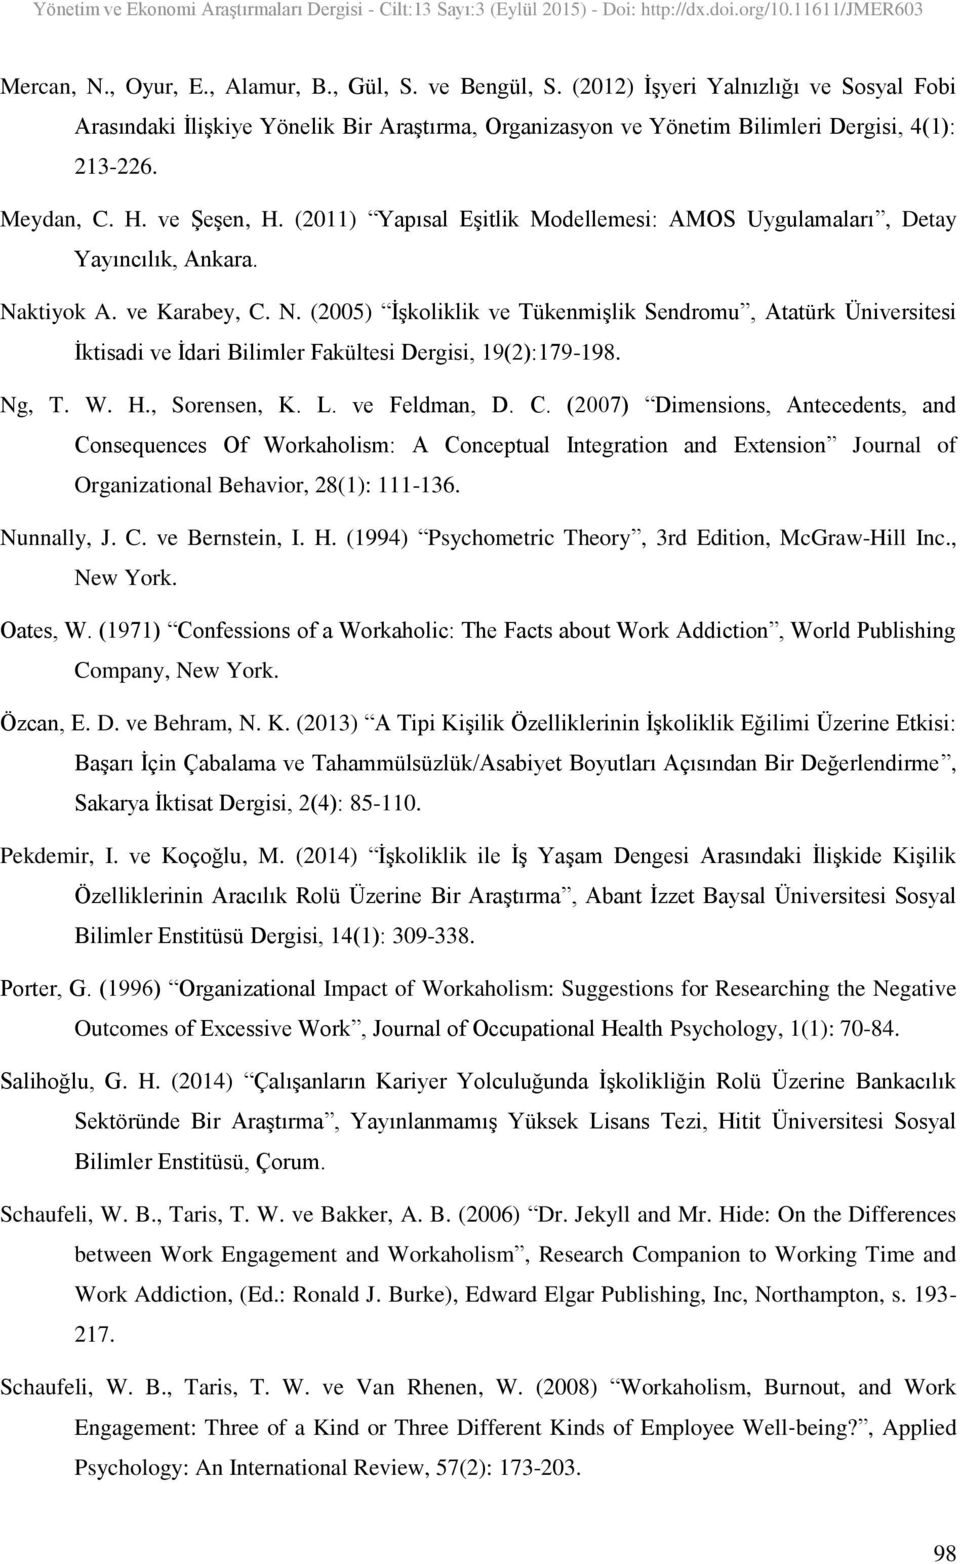 ktiyok A. ve Karabey, C. N. (2005) İşkoliklik ve Tükenmişlik Sendromu, Atatürk Üniversitesi İktisadi ve İdari Bilimler Fakültesi Dergisi, 19(2):179-198. Ng, T. W. H., Sorensen, K. L. ve Feldman, D. C. (2007) Dimensions, Antecedents, and Consequences Of Workaholism: A Conceptual Integration and Extension Journal of Organizational Behavior, 28(1): 111-136.